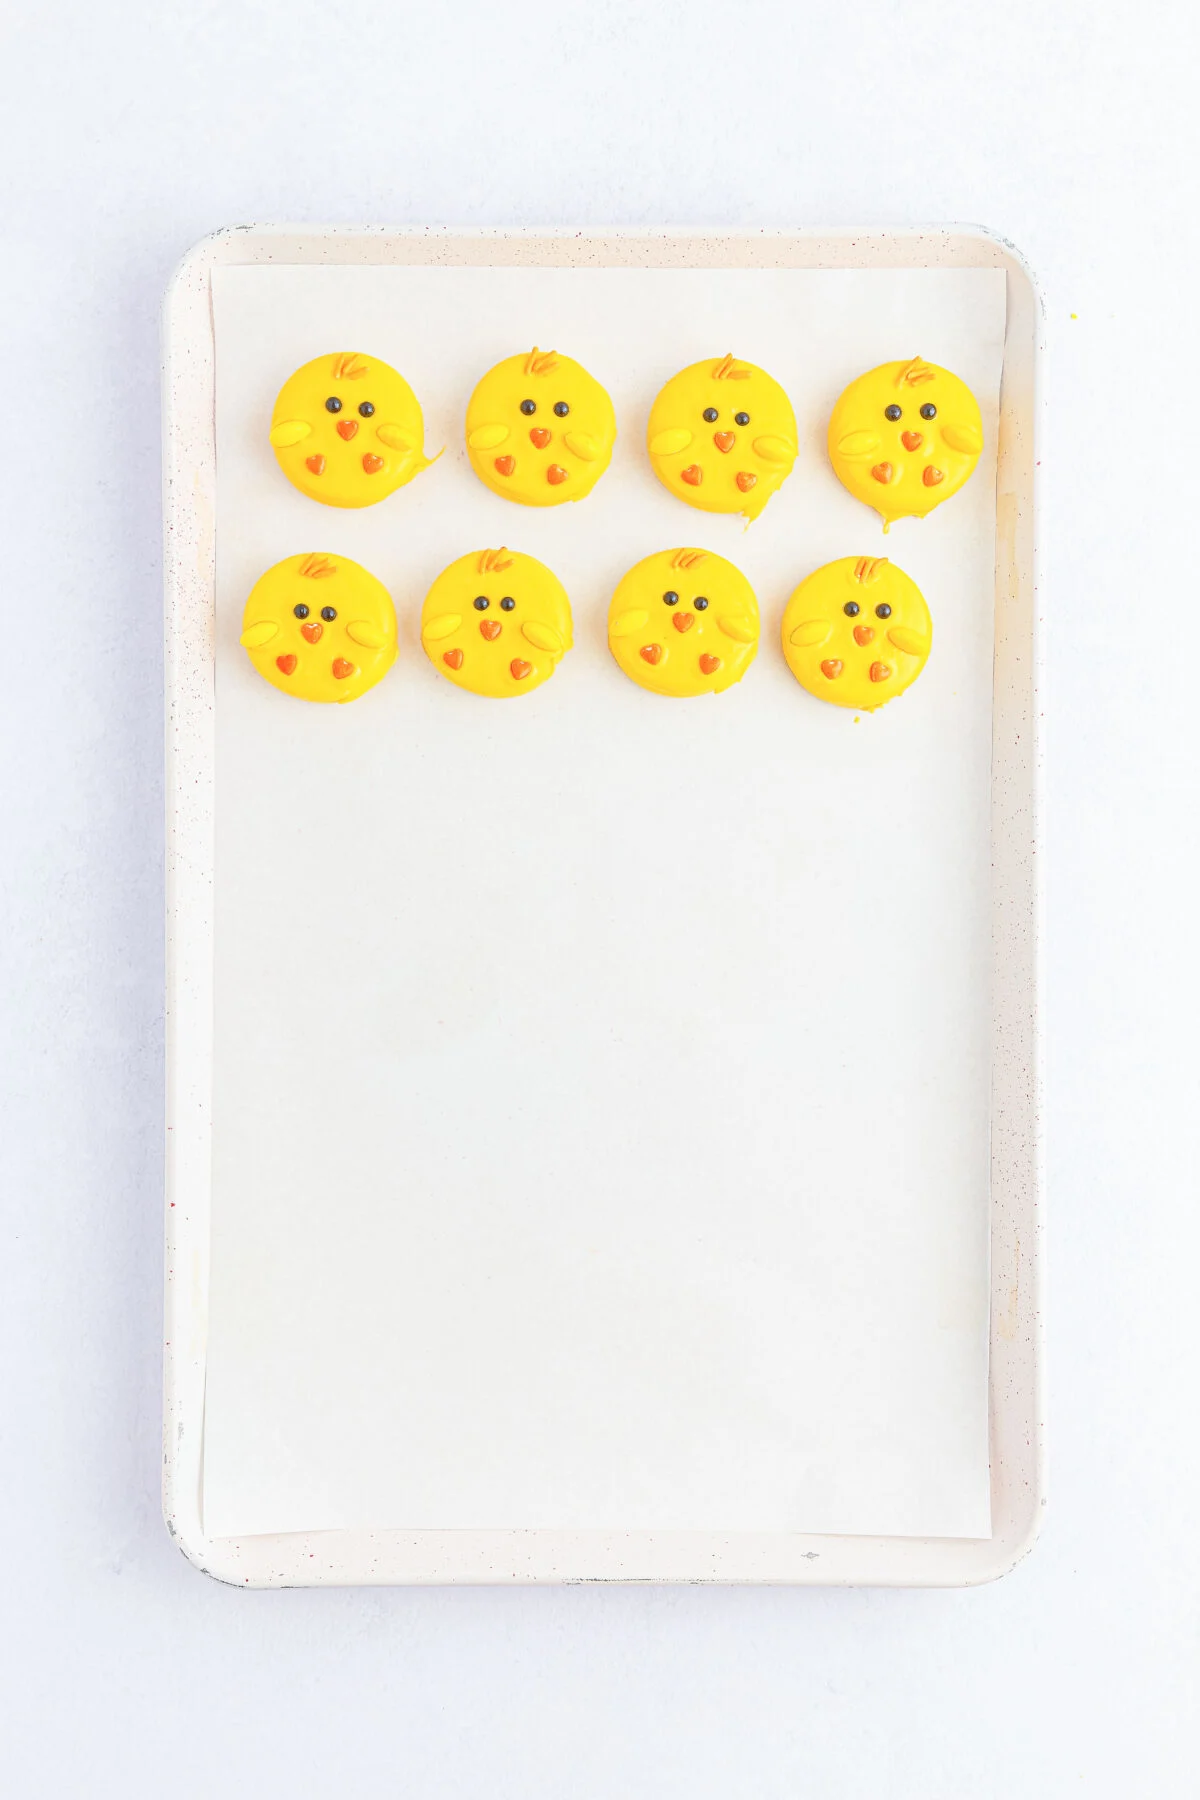 8 yellow chicks on a sheet pan.